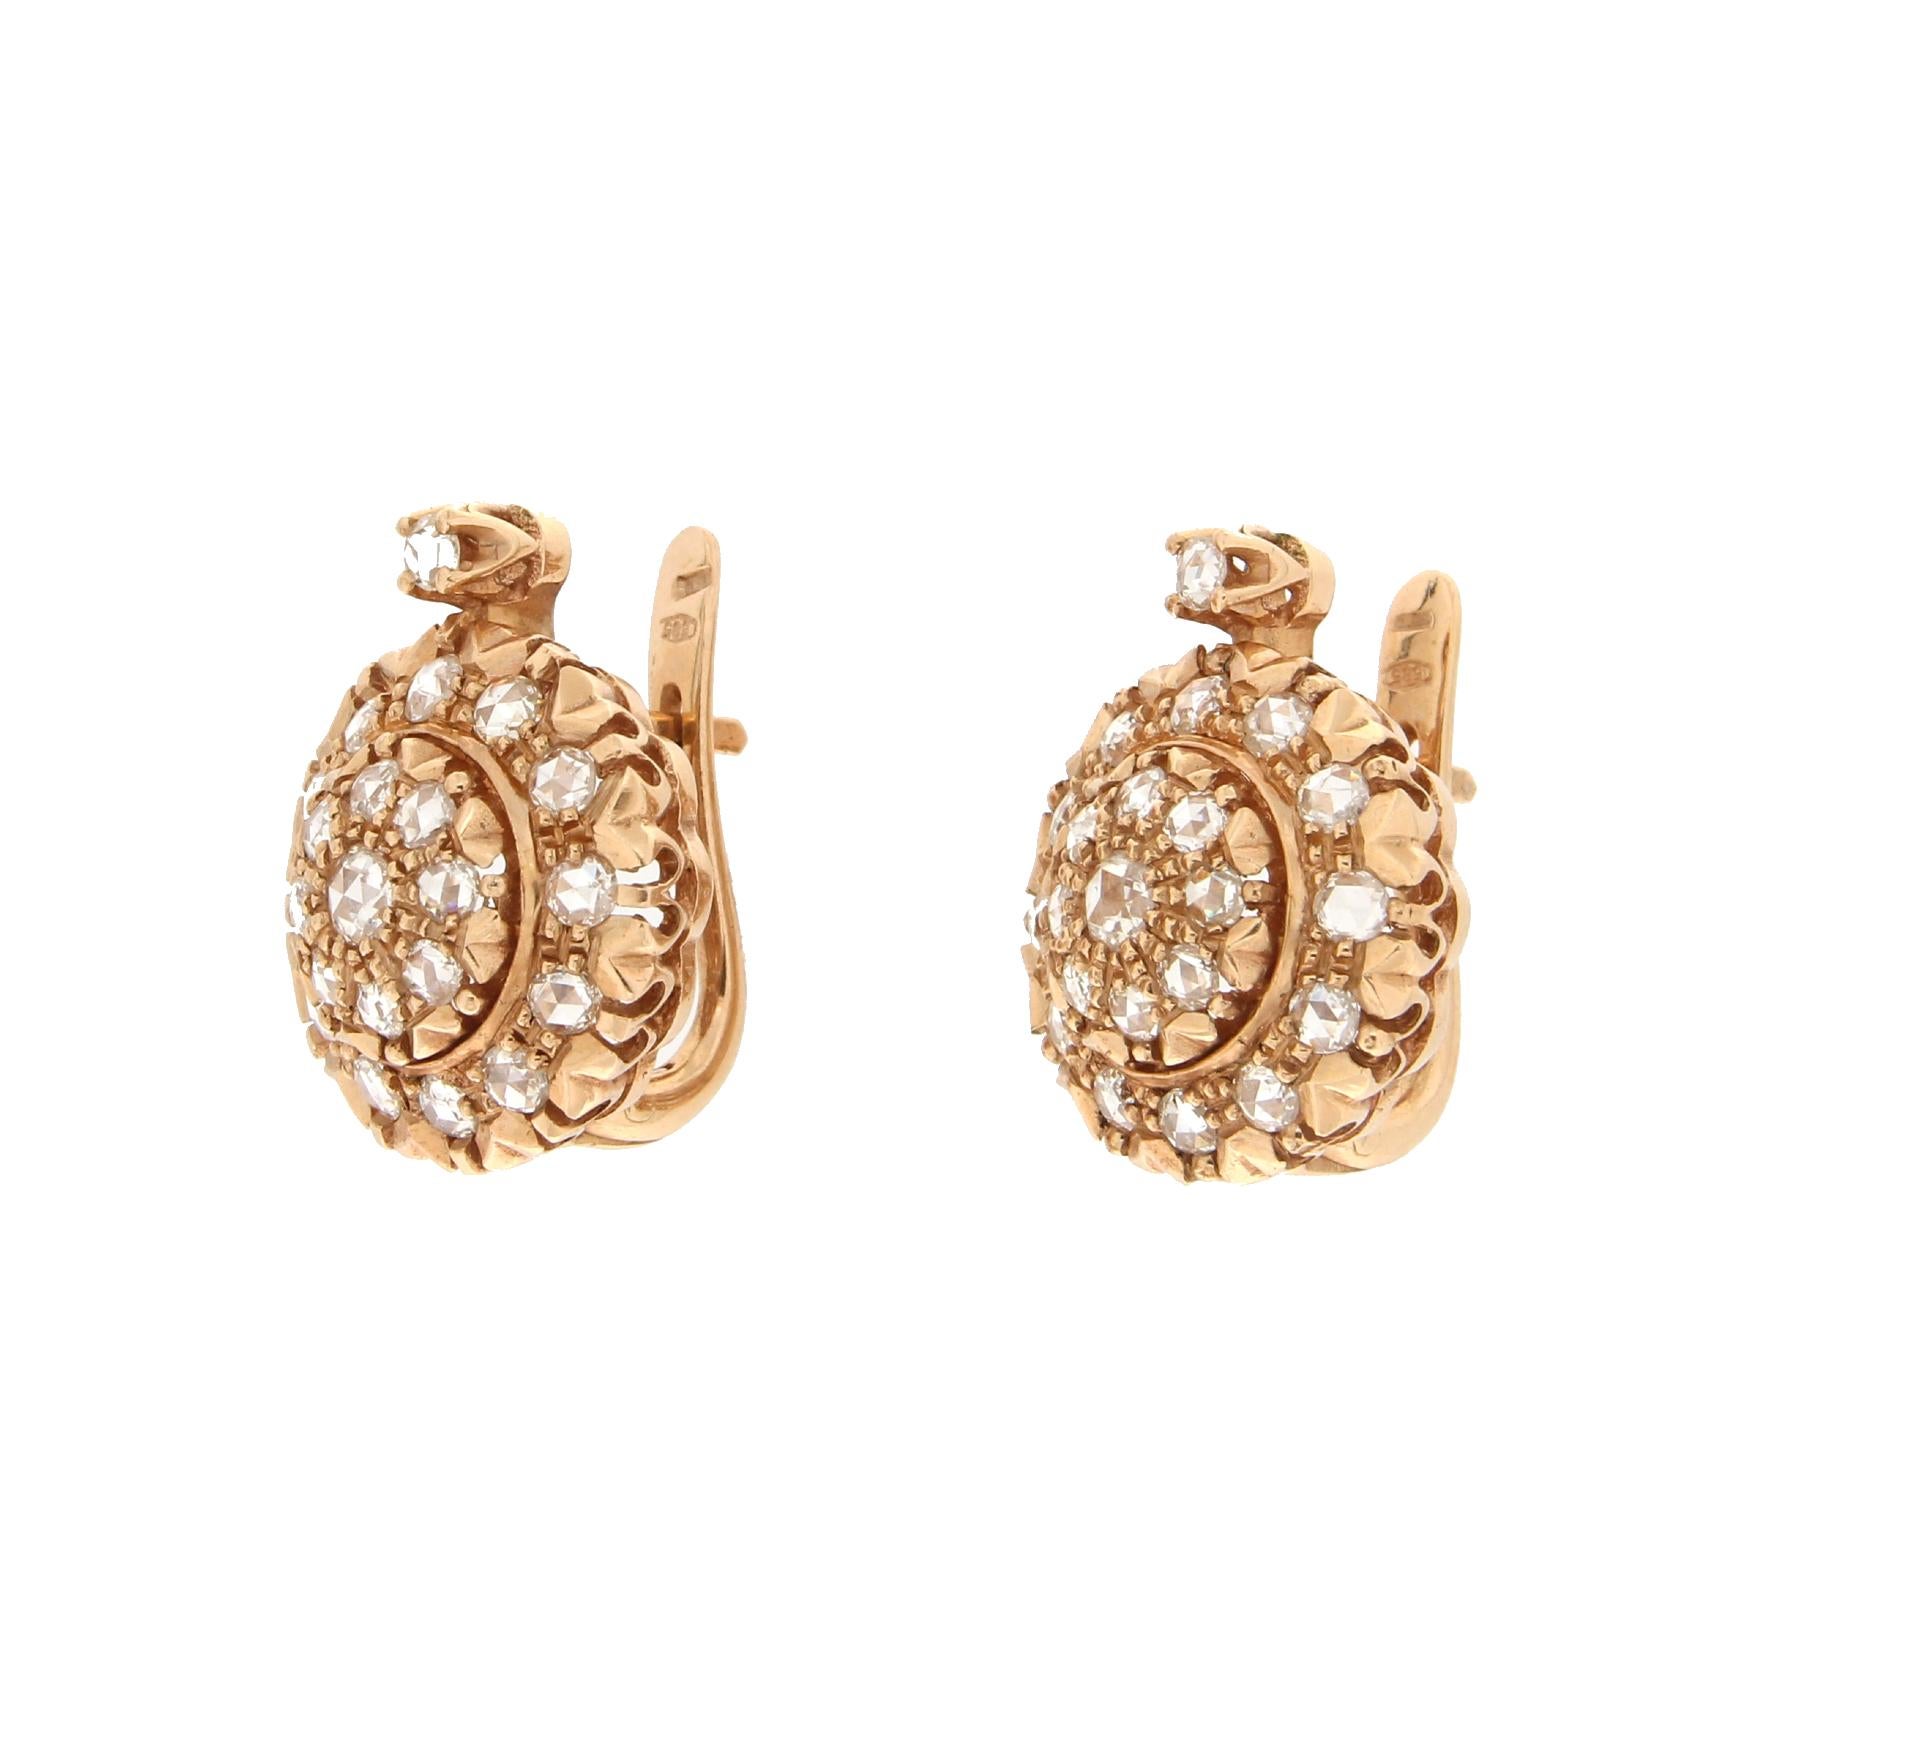 Handcraft Rose Cut Diamonds 14 Karat Yellow Gold Stud Earrings For Sale 2